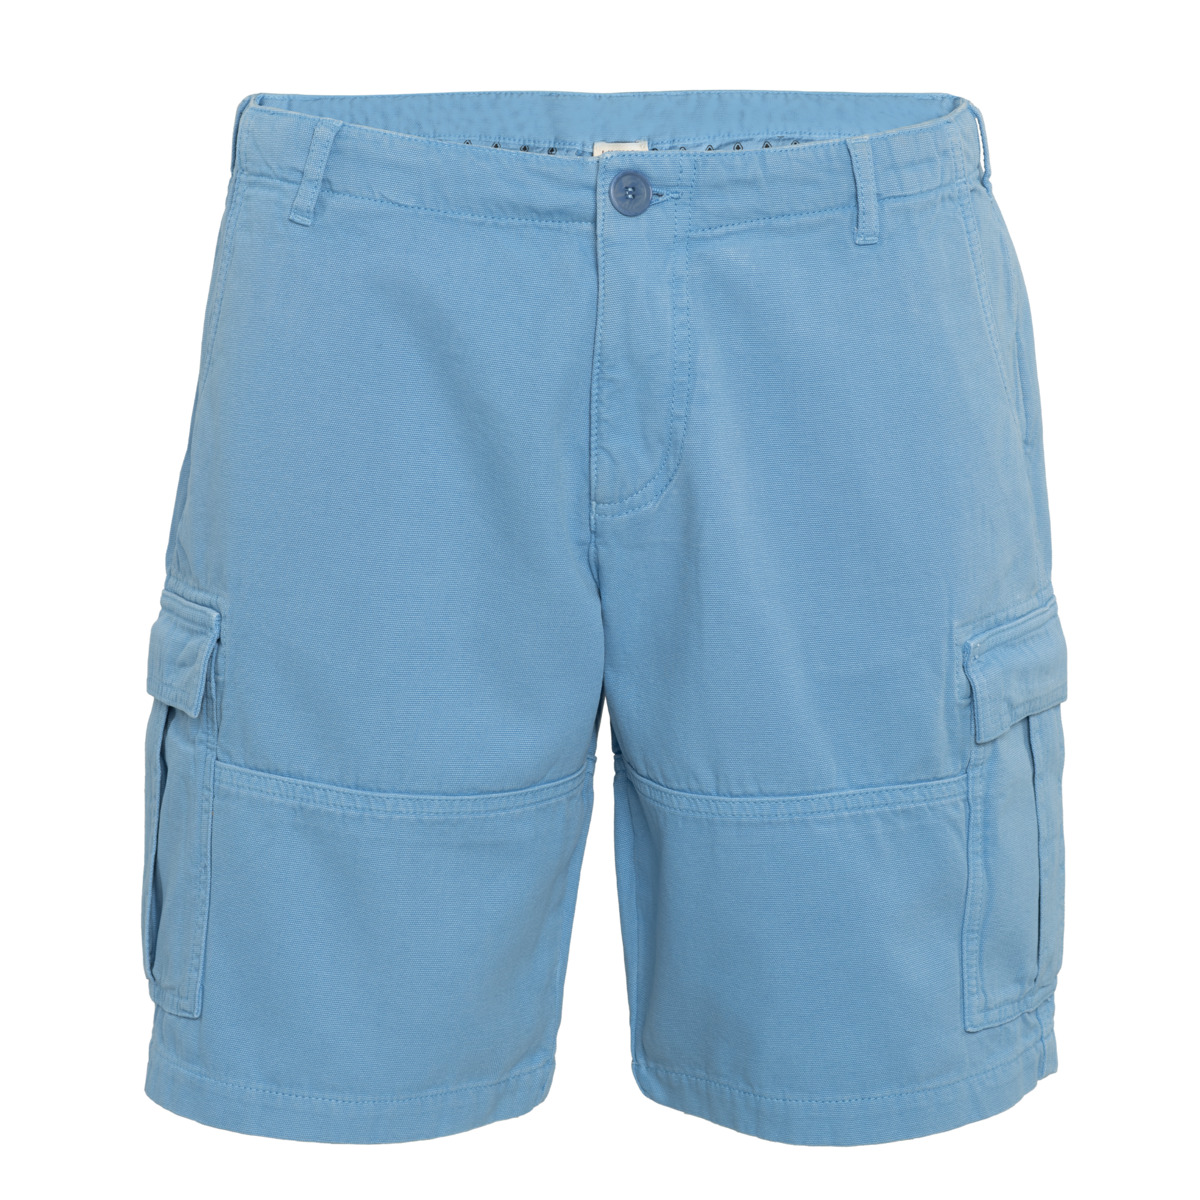 Blue Bermuda shorts, RICO